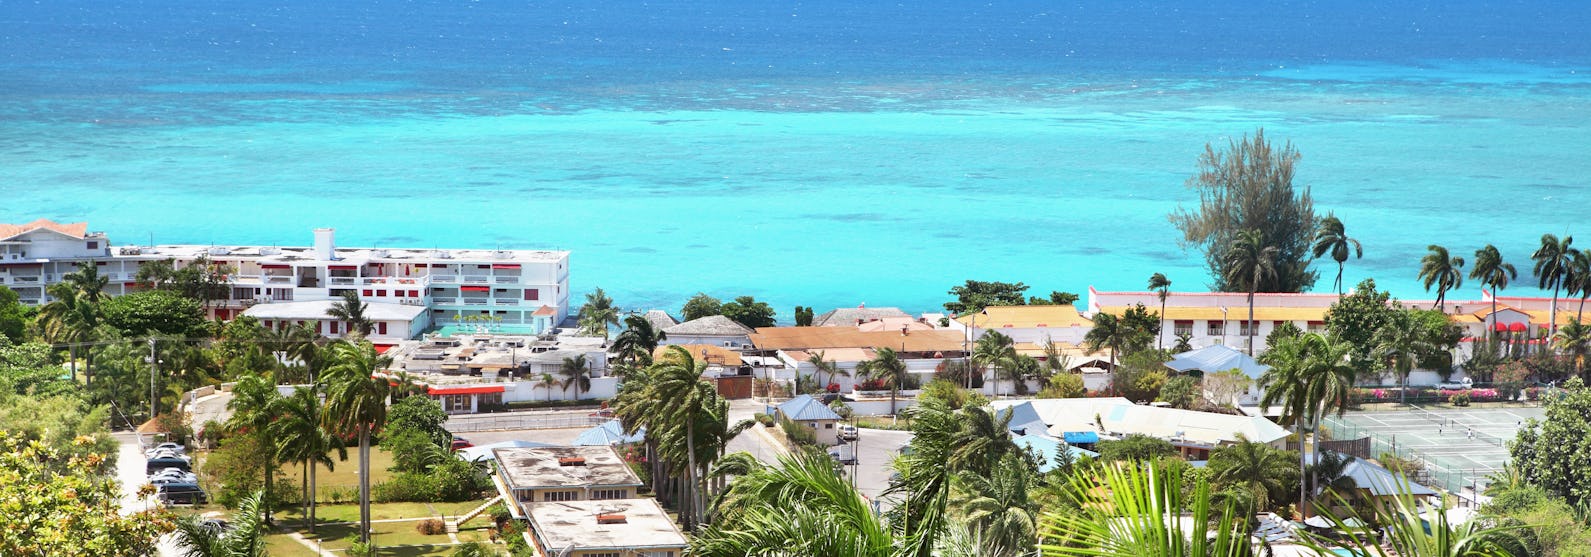 Montego-Bay-Jamaica-Caribbean